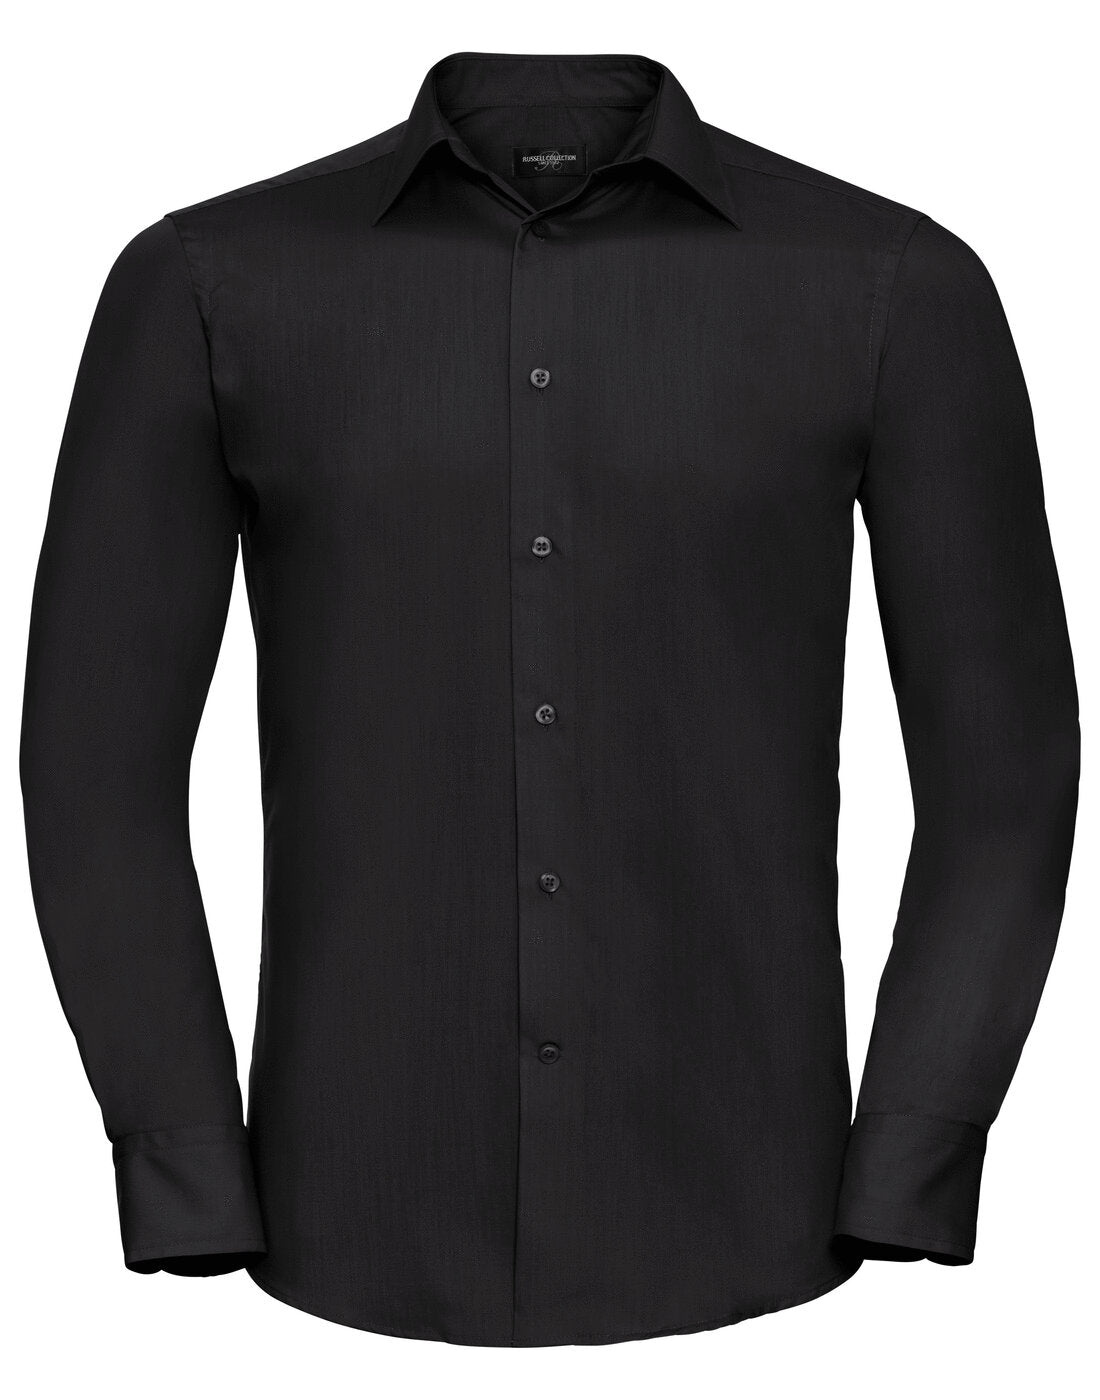 Russell Mens Long Sleeve Tailored Polycotton Poplin Shirt Black